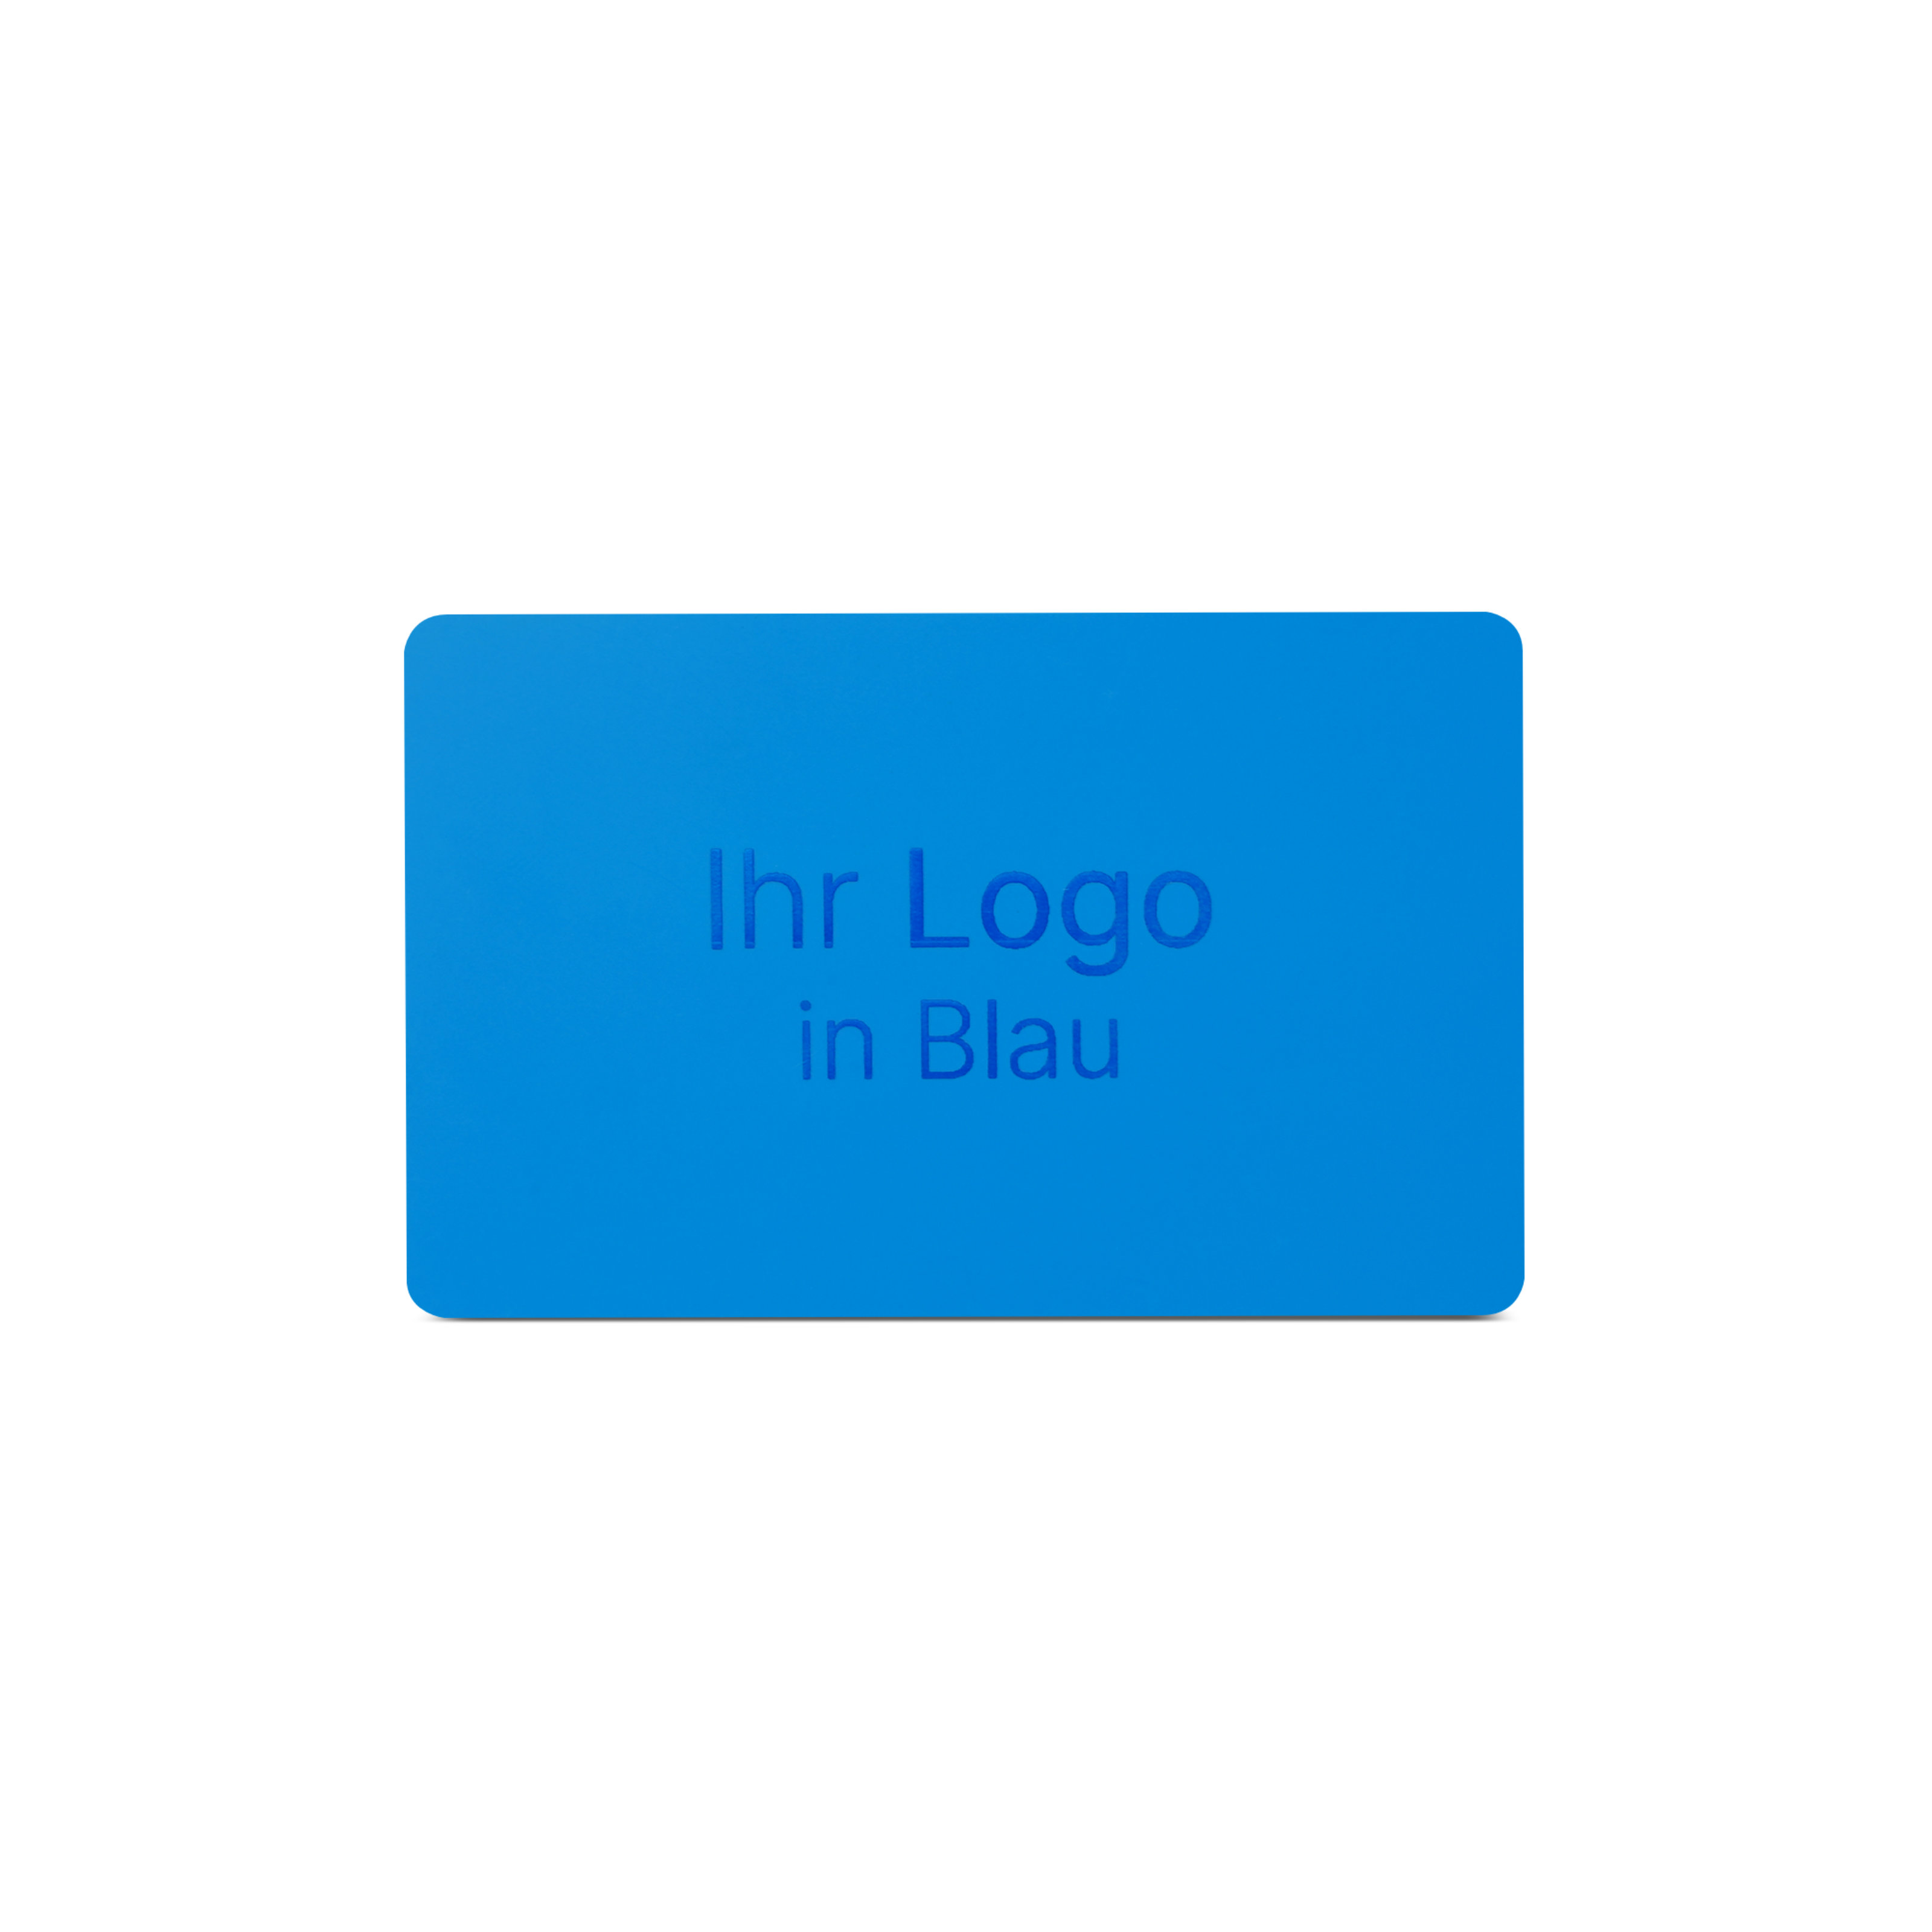 NFC Karte PVC - 85,6 x 54 mm - NTAG213 - 180 Byte - blau matt - durchgefärbt